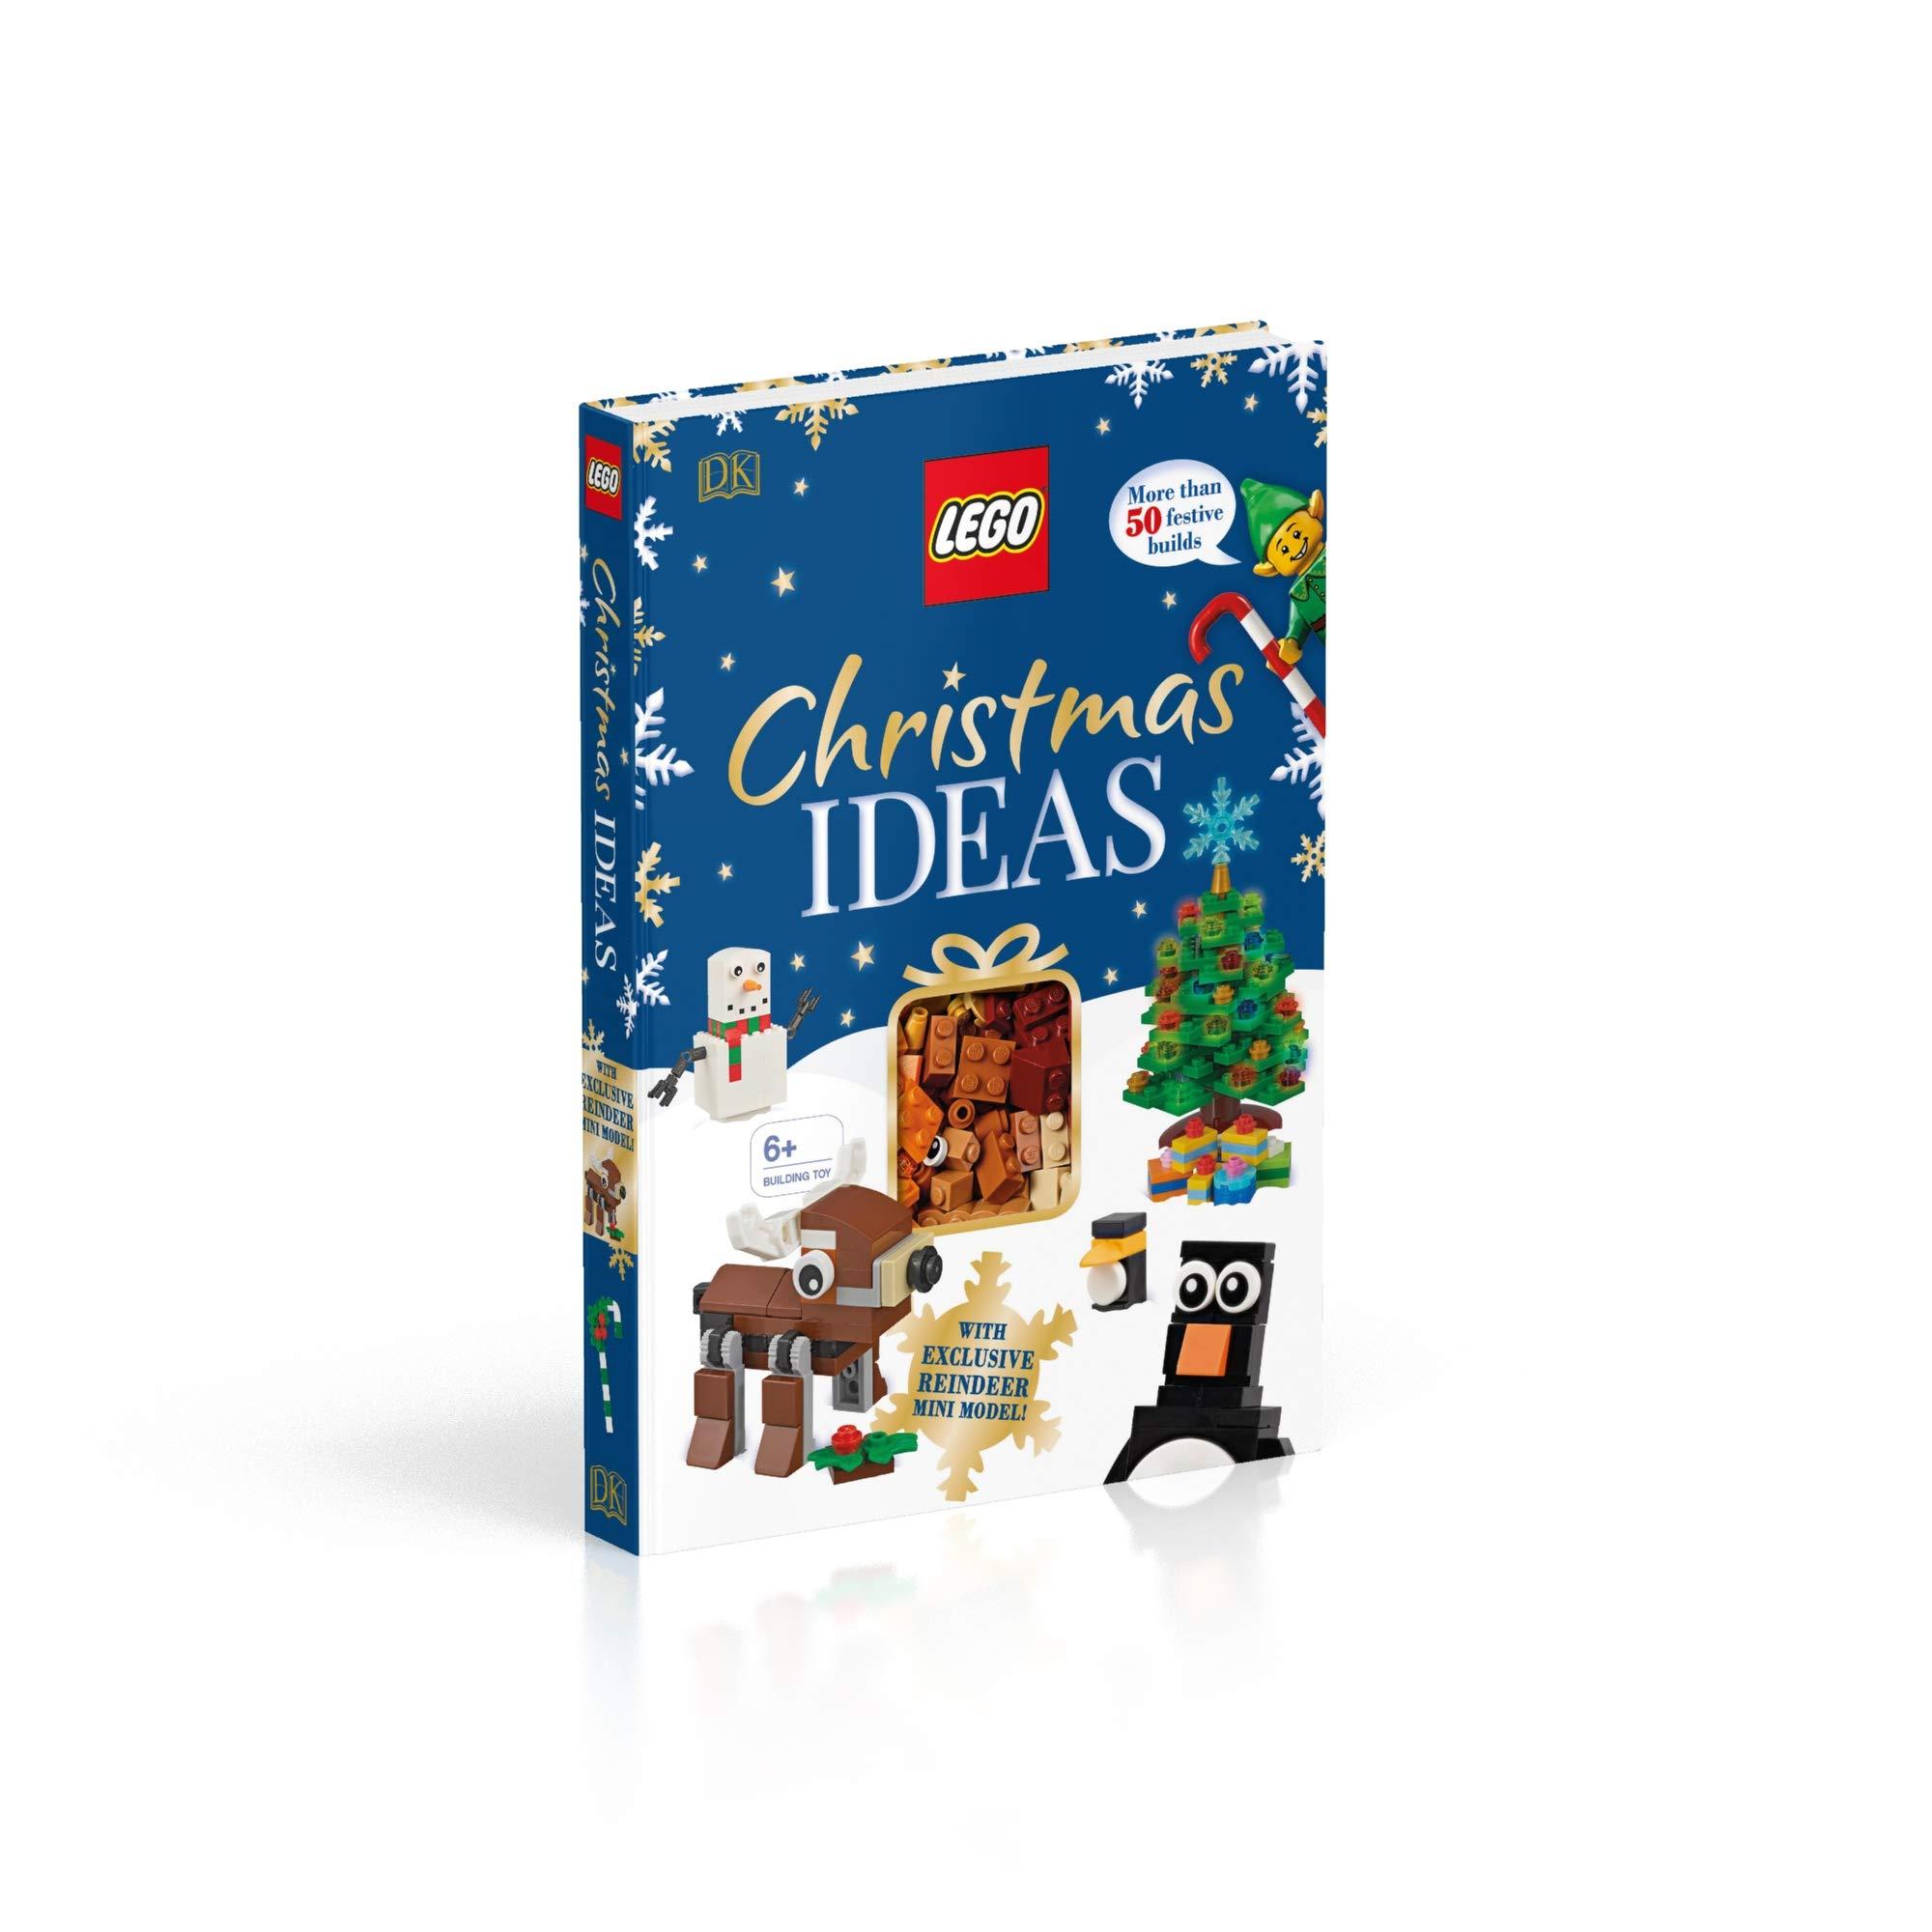 LEGO Christmas Ideas: With Exclusive Reindeer Mini Model